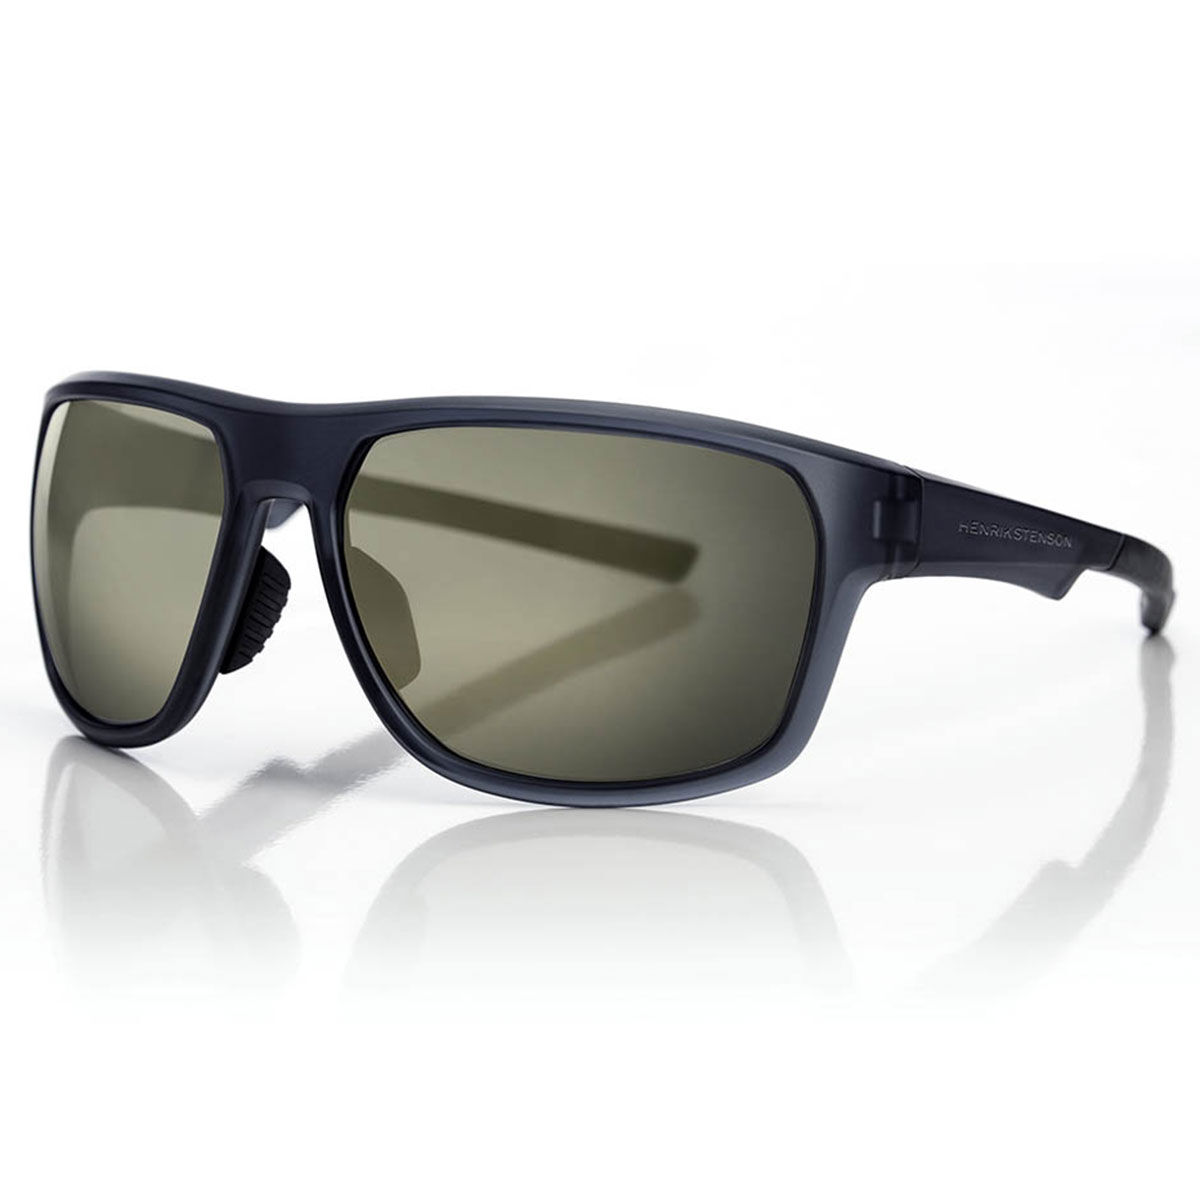 Henrik Stenson Eyewear Torque 3.0 Golf Sunglasses, Mens, Milky grey/black/smoke/bronze, One Size | American Golf